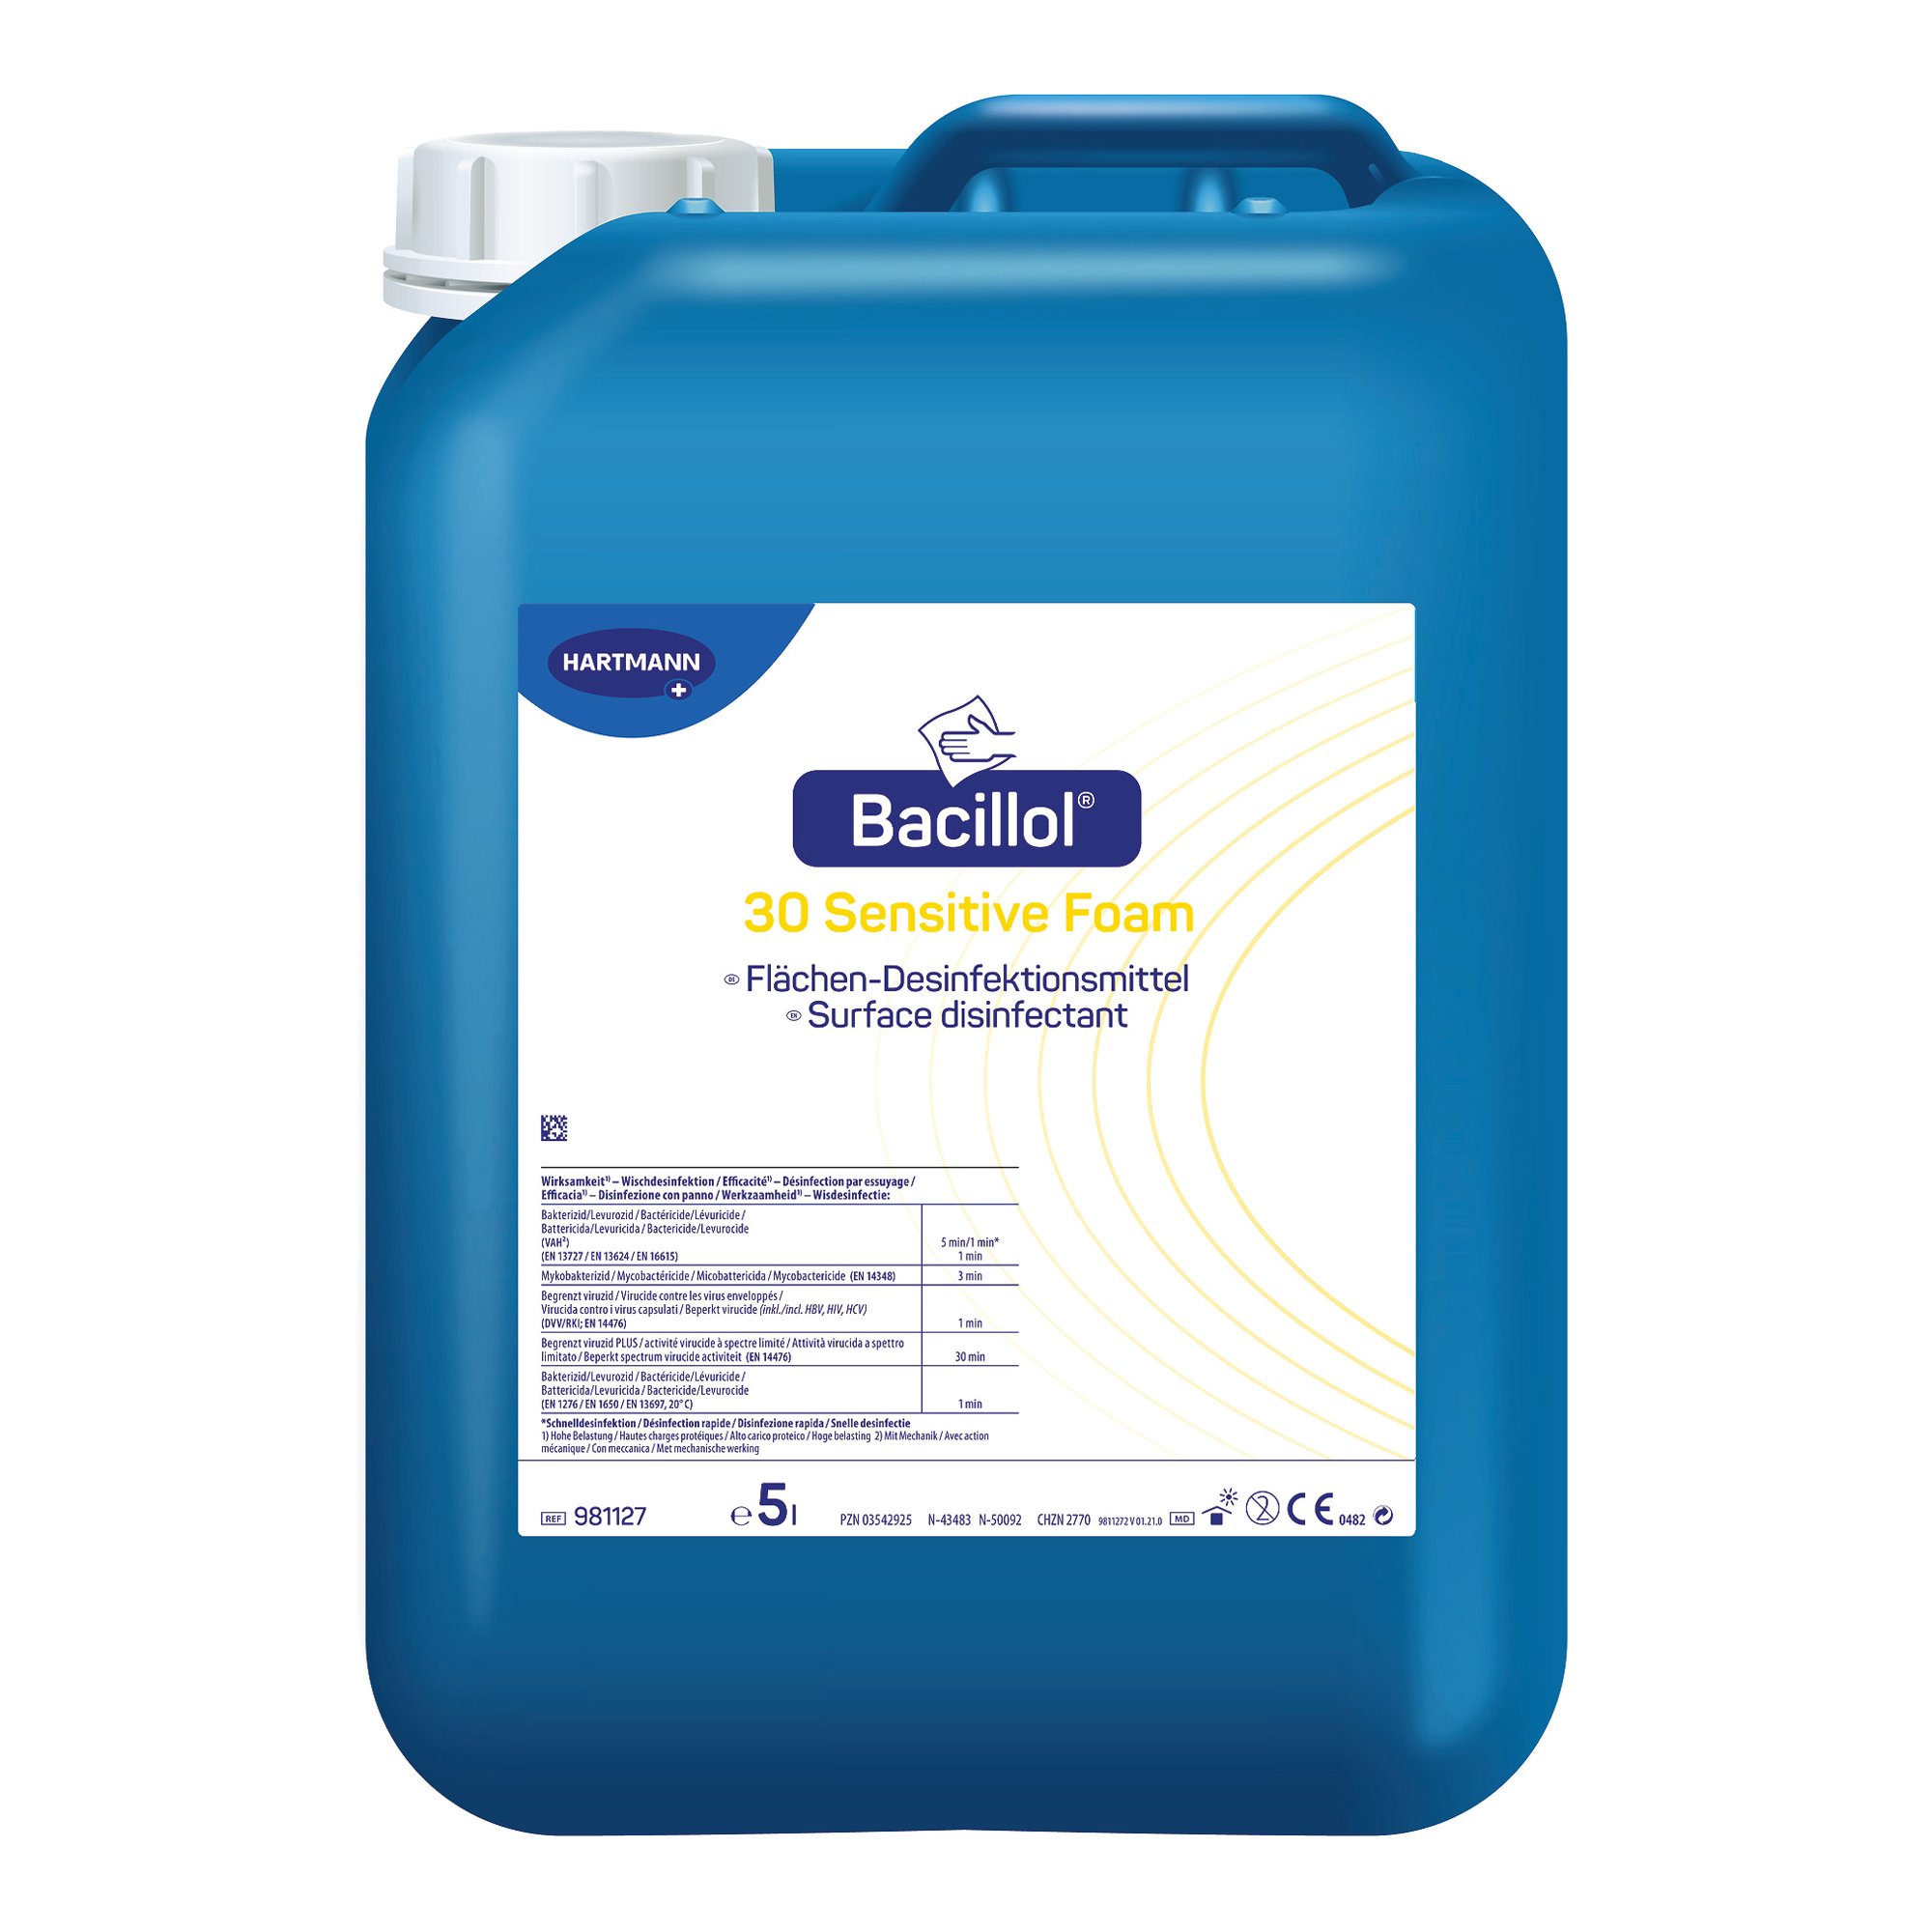 Sensitive Bode 30 Flaechenesinfektionsmittel Foam Bacillol